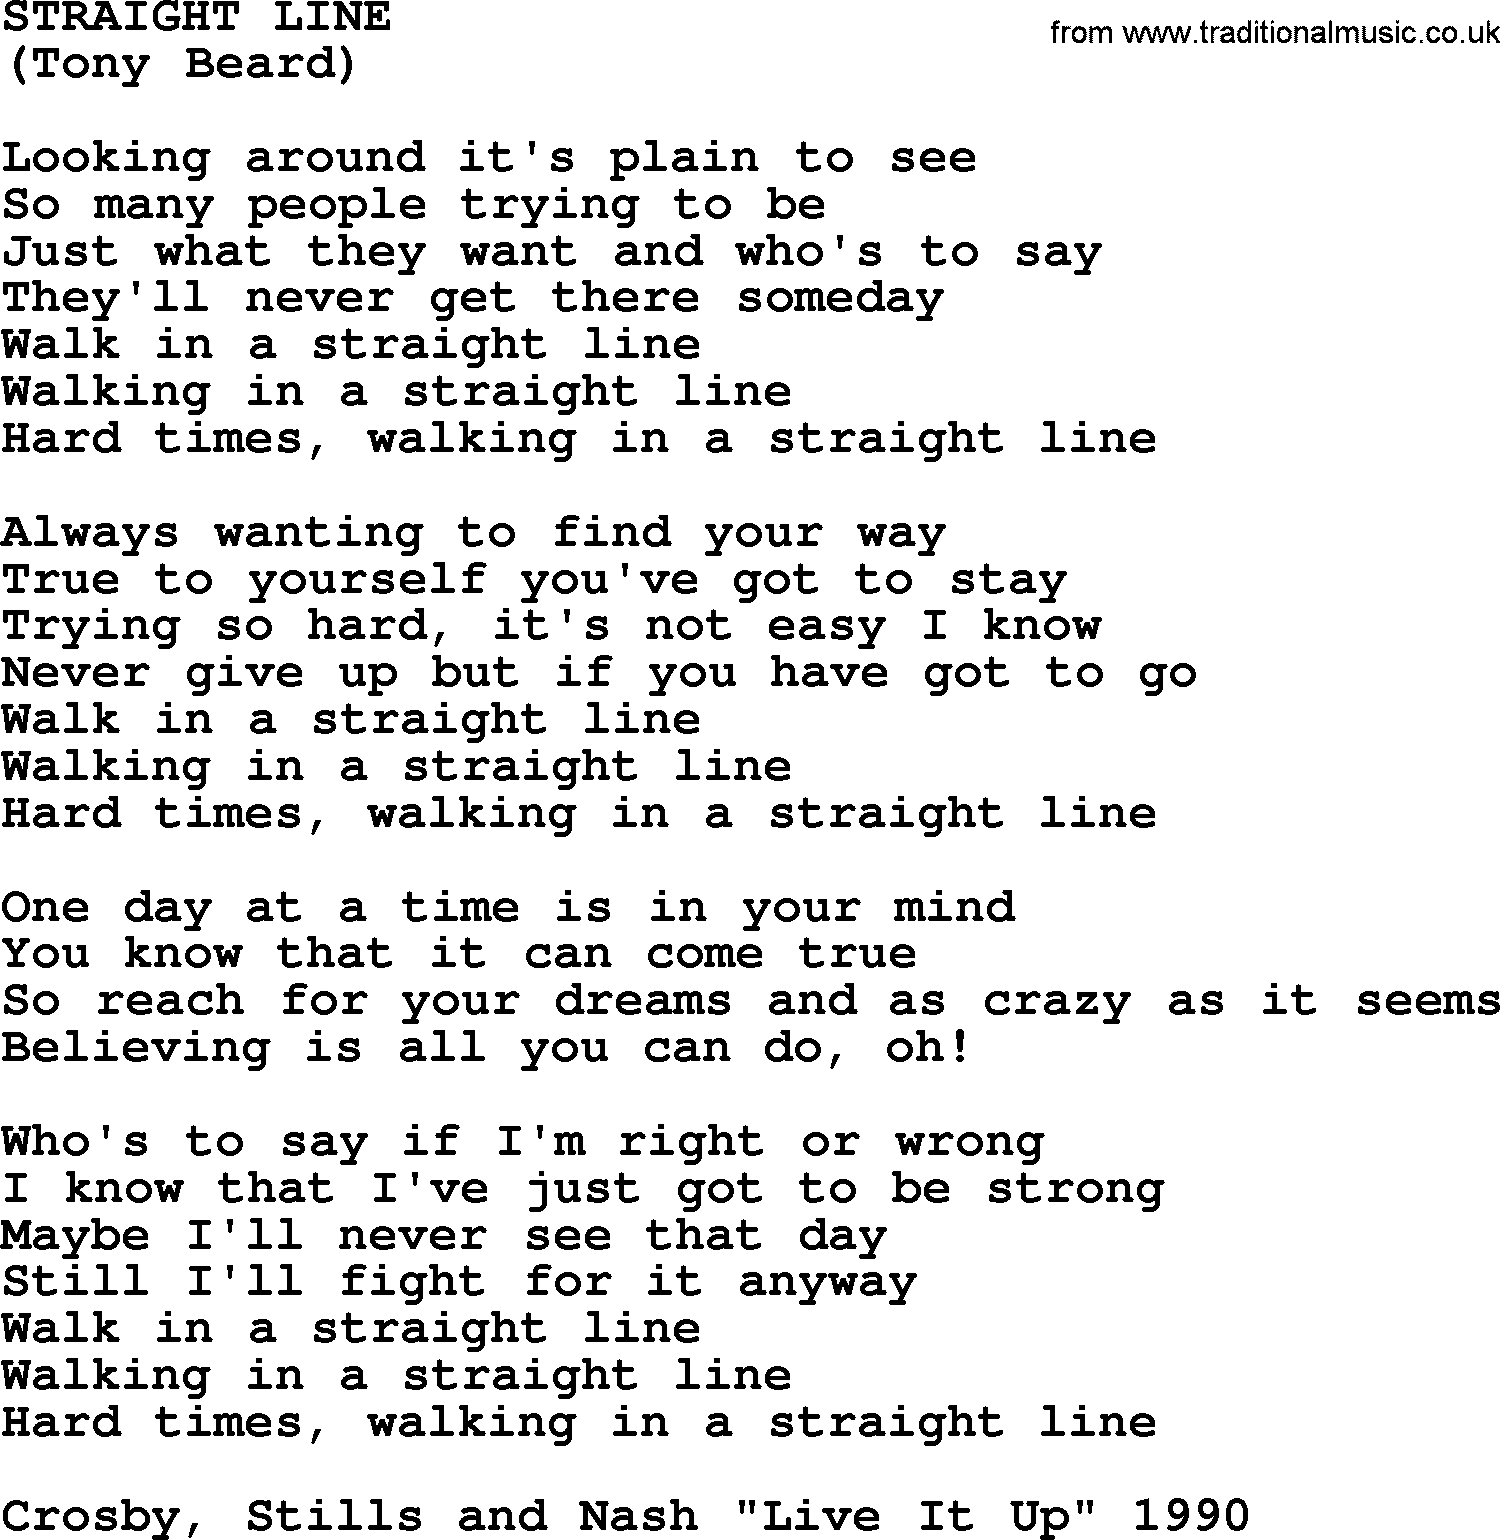 The Byrds song Straight Line, lyrics